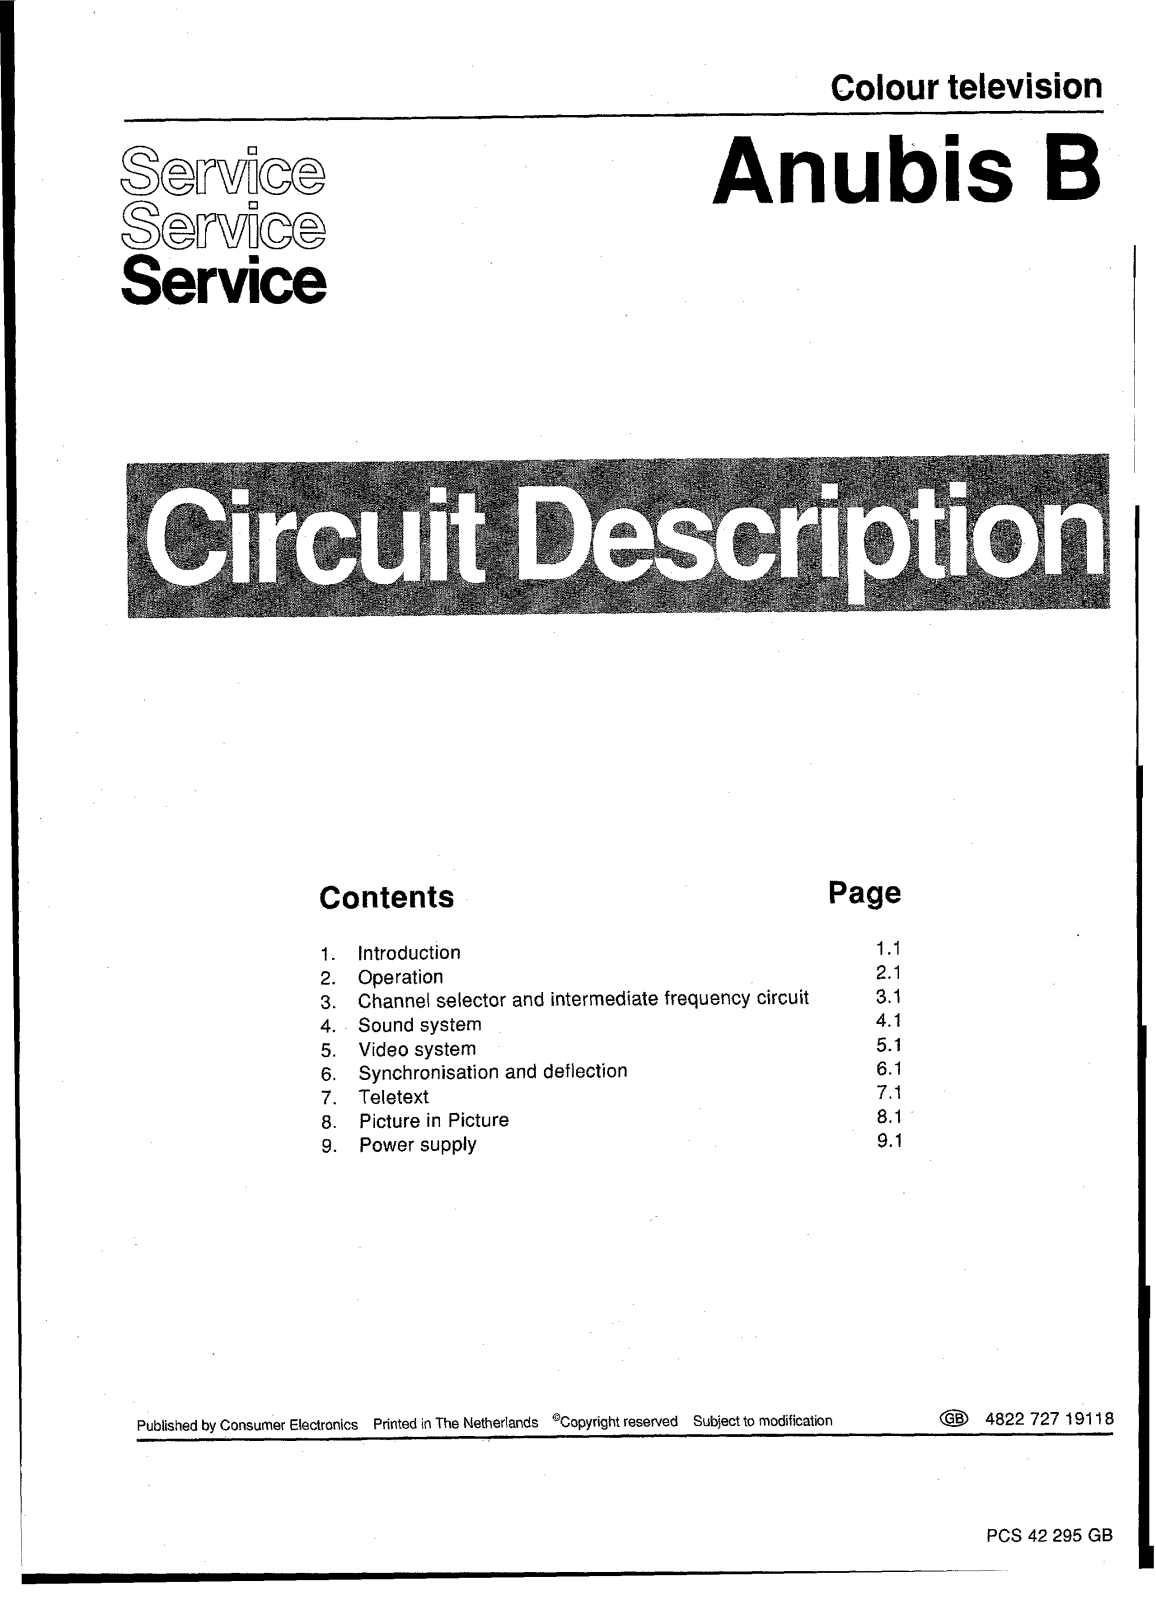 Philips Anubis-B Service Manual